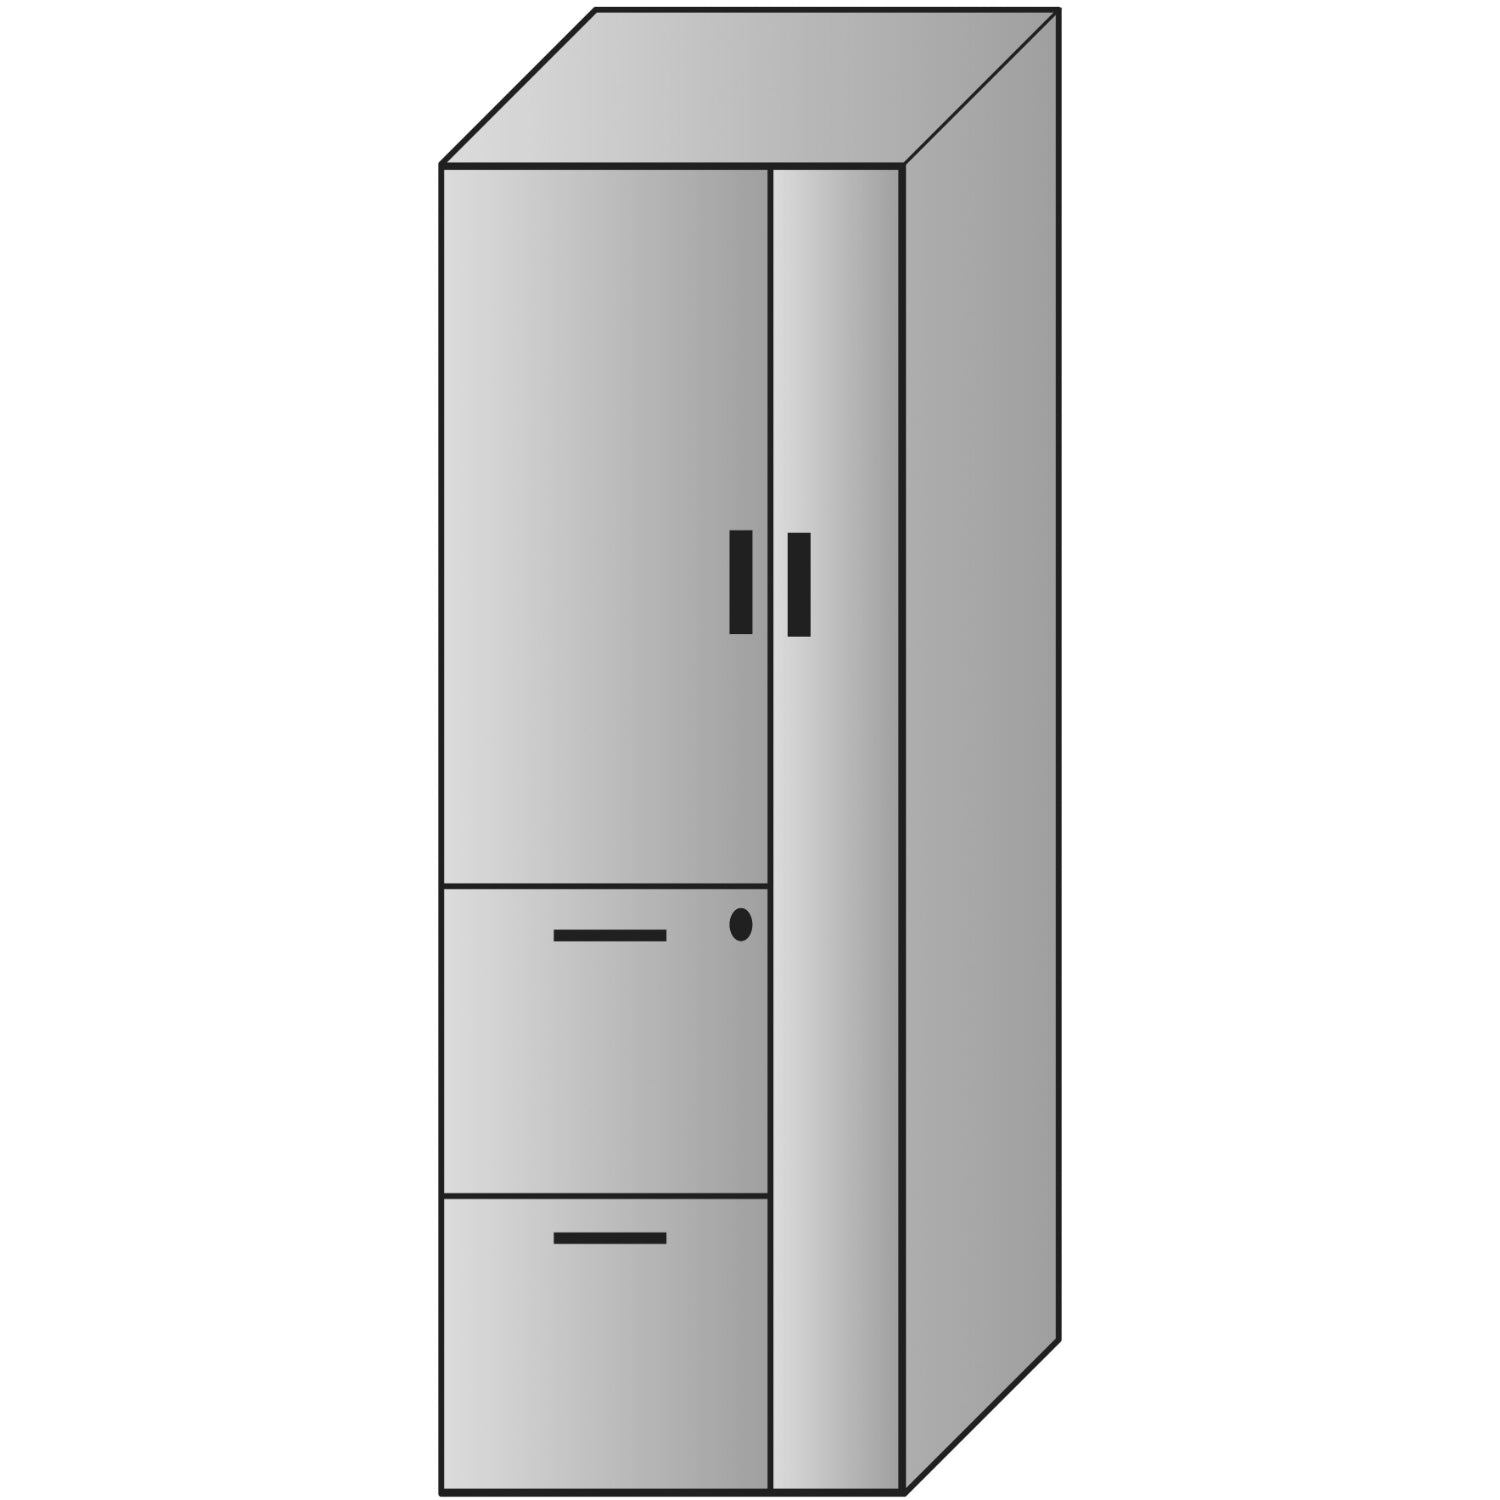 "Napa White" Personal Storage Cabinet, 22.5" x 24" x 65" H